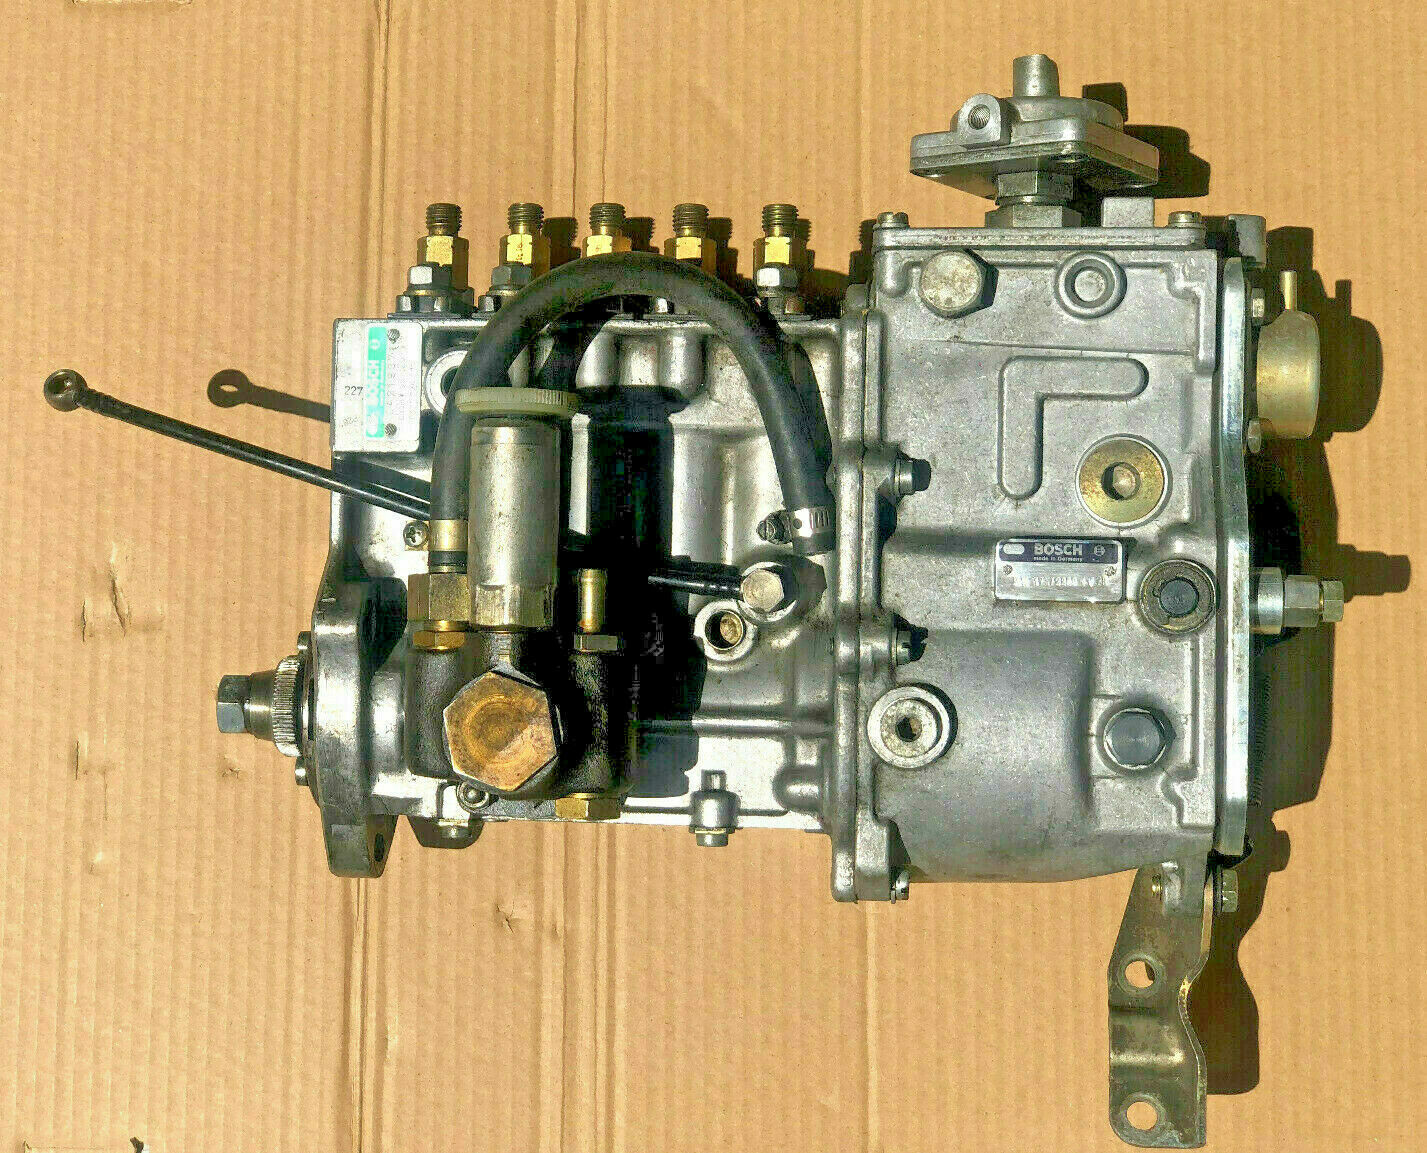 Rebuild Parts Set 1417010004 GK210, GK209 FOR PES5MW & 6MW RS16 Pumps w RW/2200